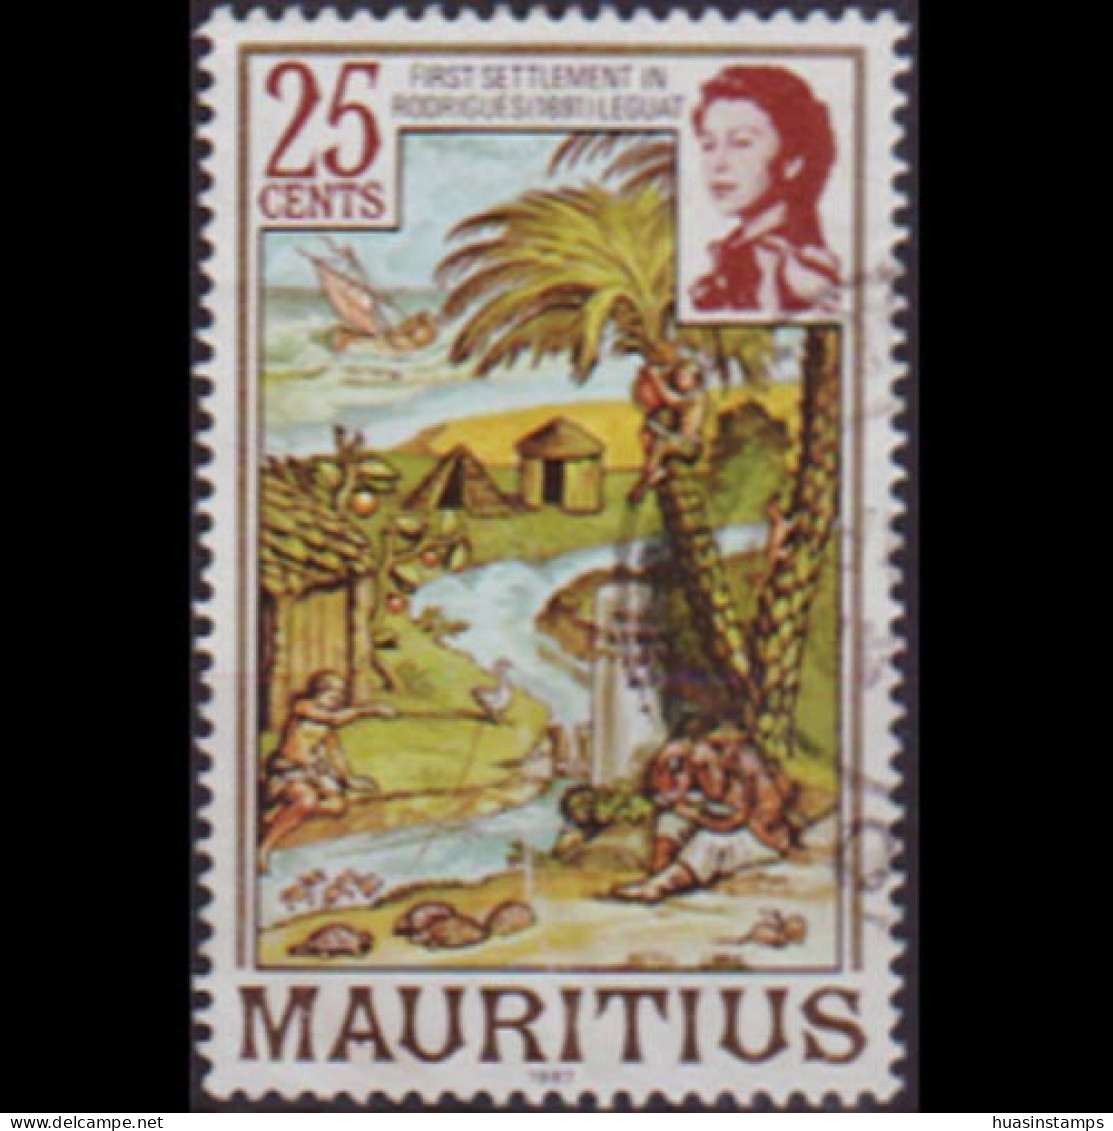 MAURITIUS 1987 - Scott# 447a Settlement Wmk 384 25c Used - Maurice (1968-...)